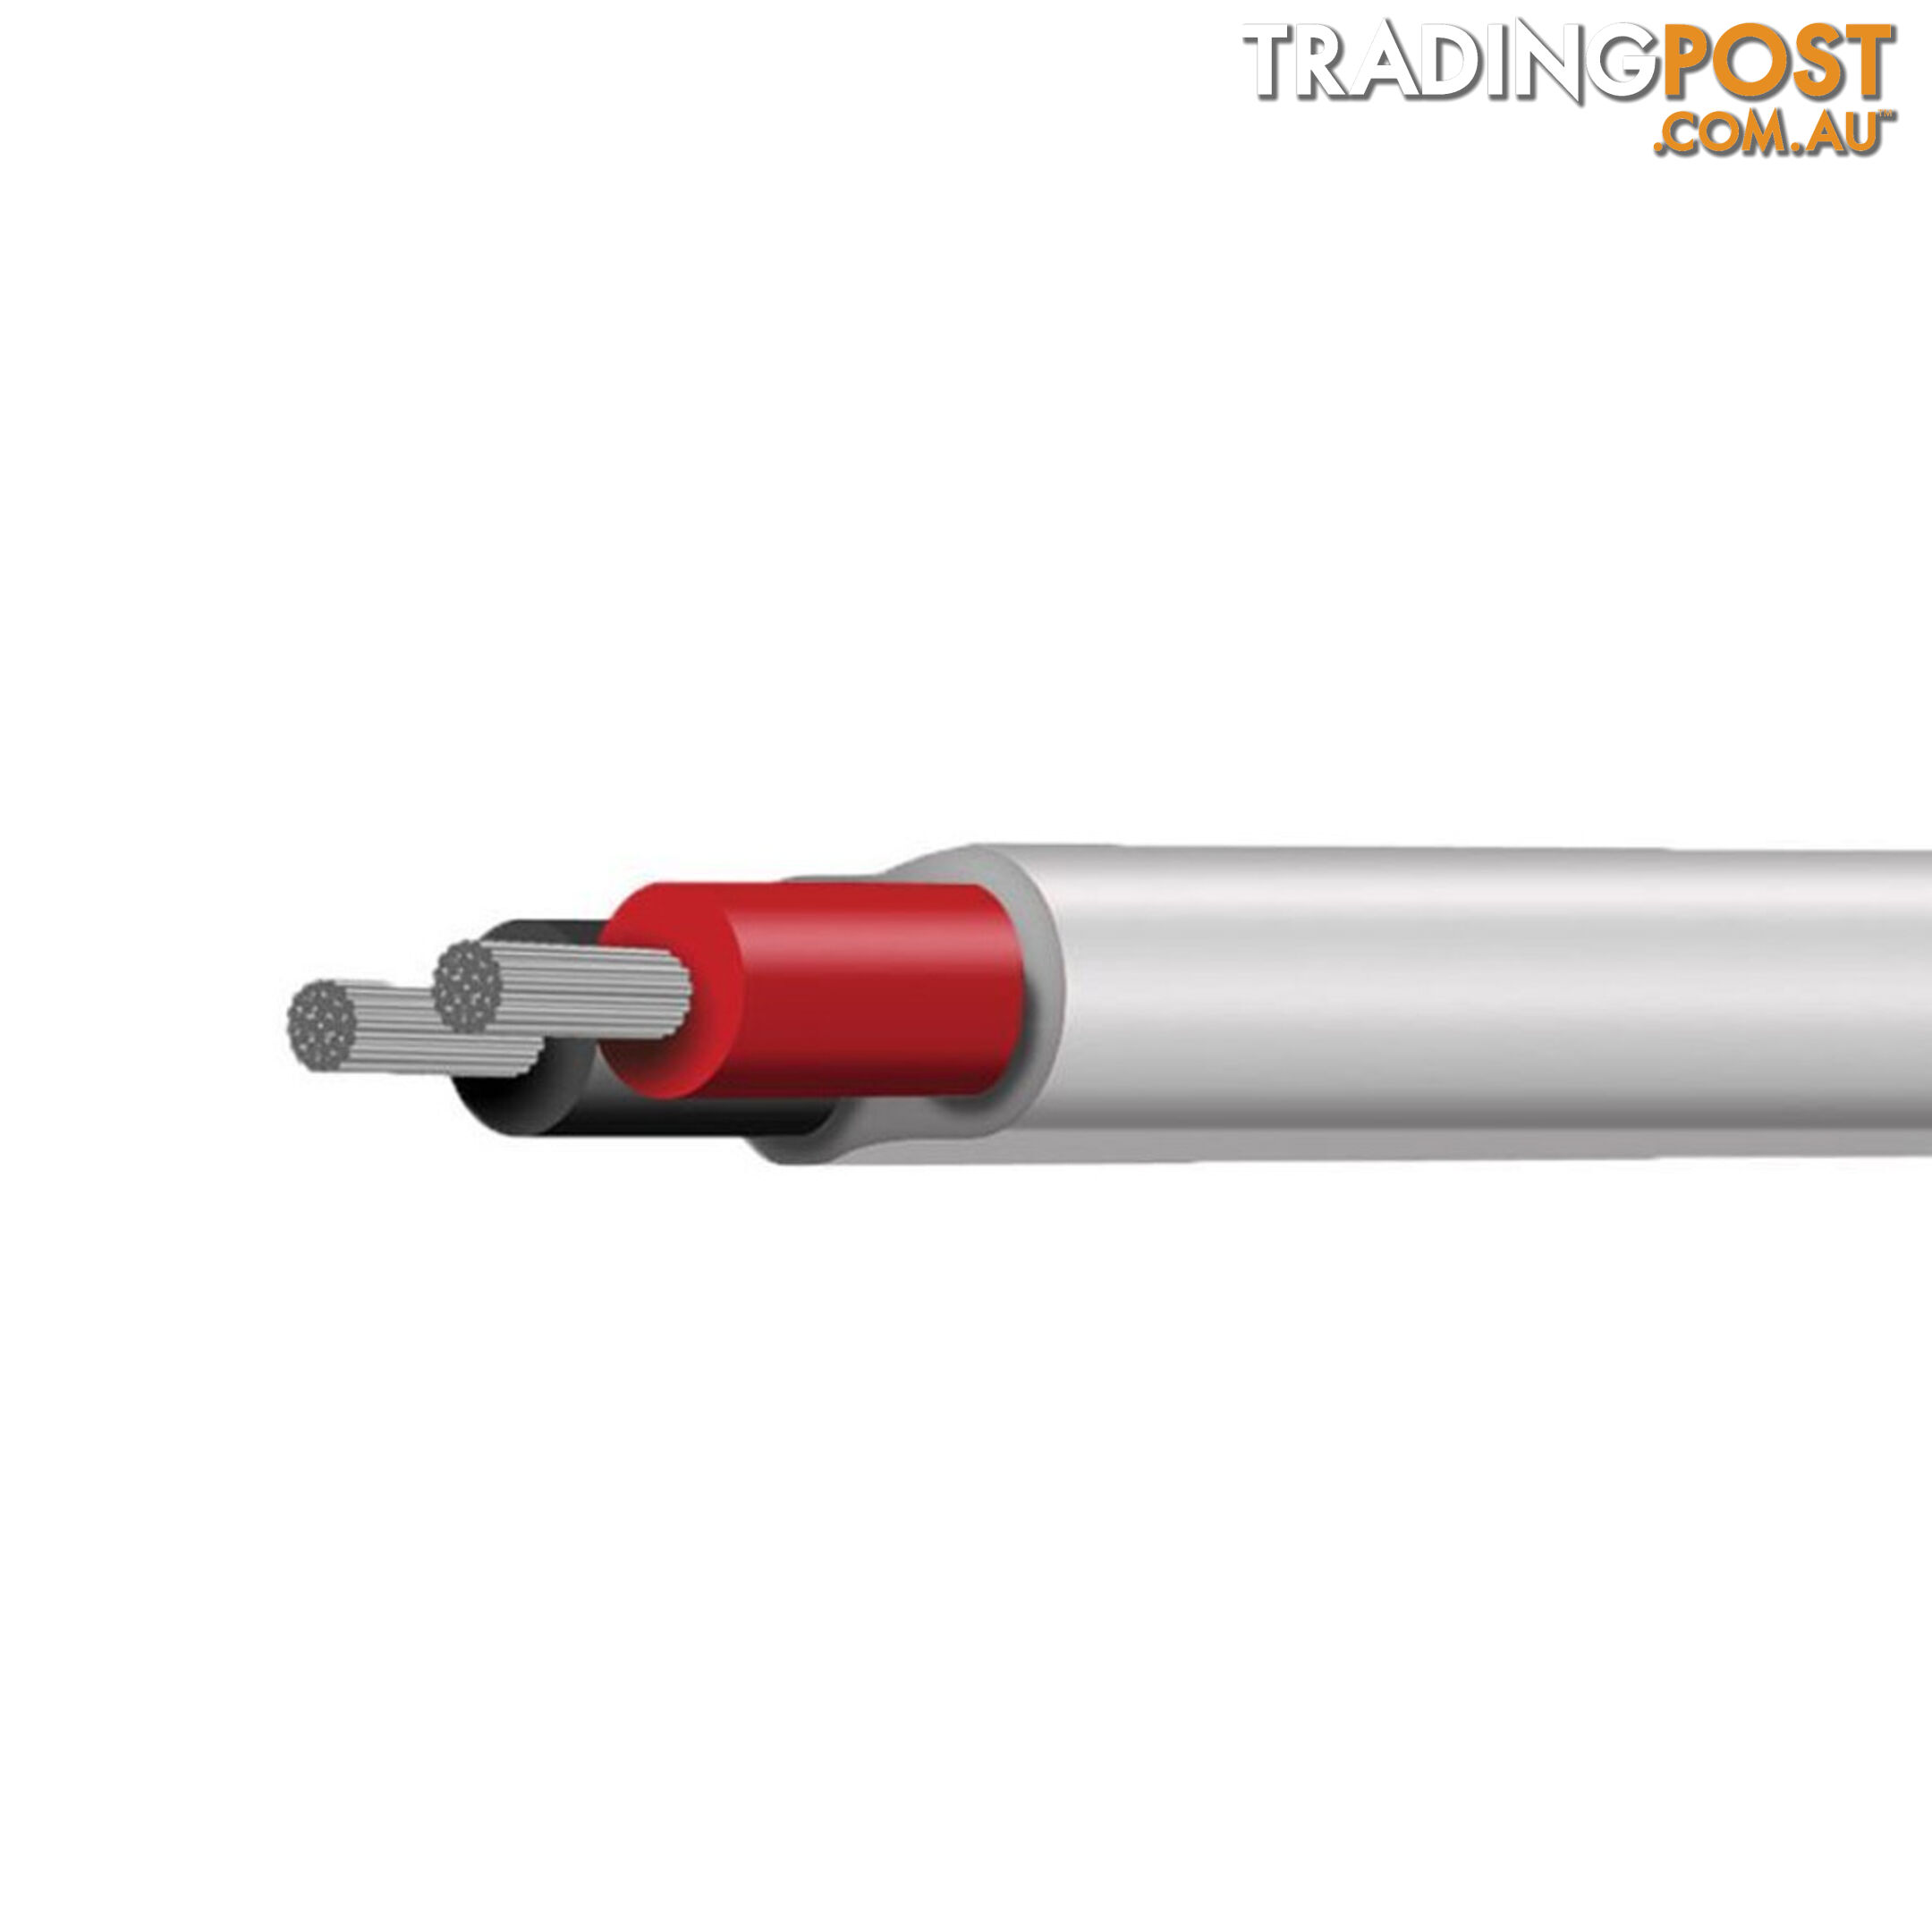 Tycab 2mm Tinned Marine Wire (0.5mm2) 7amp White Sheath SKU - MWS21602